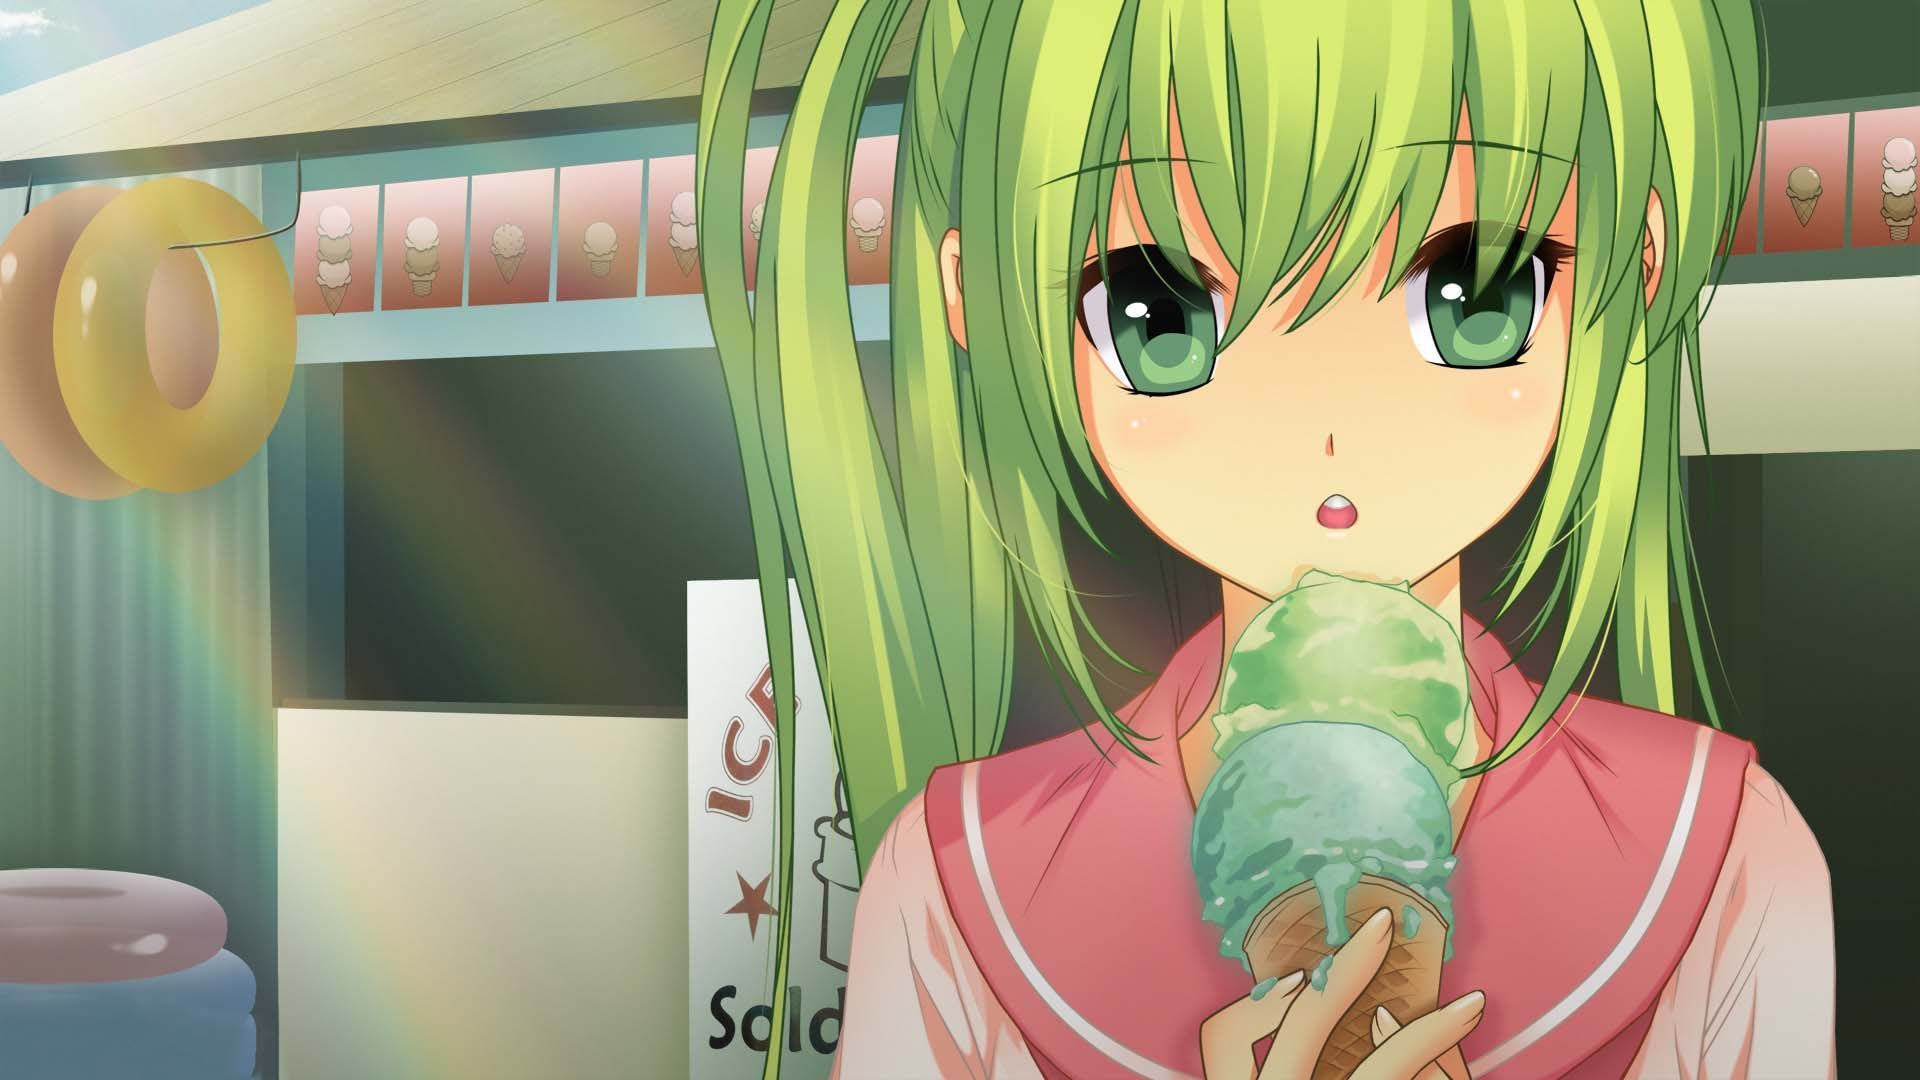 Girls Eating Ice Cream. HD Anime Wallpaper for Mobile and Desktop